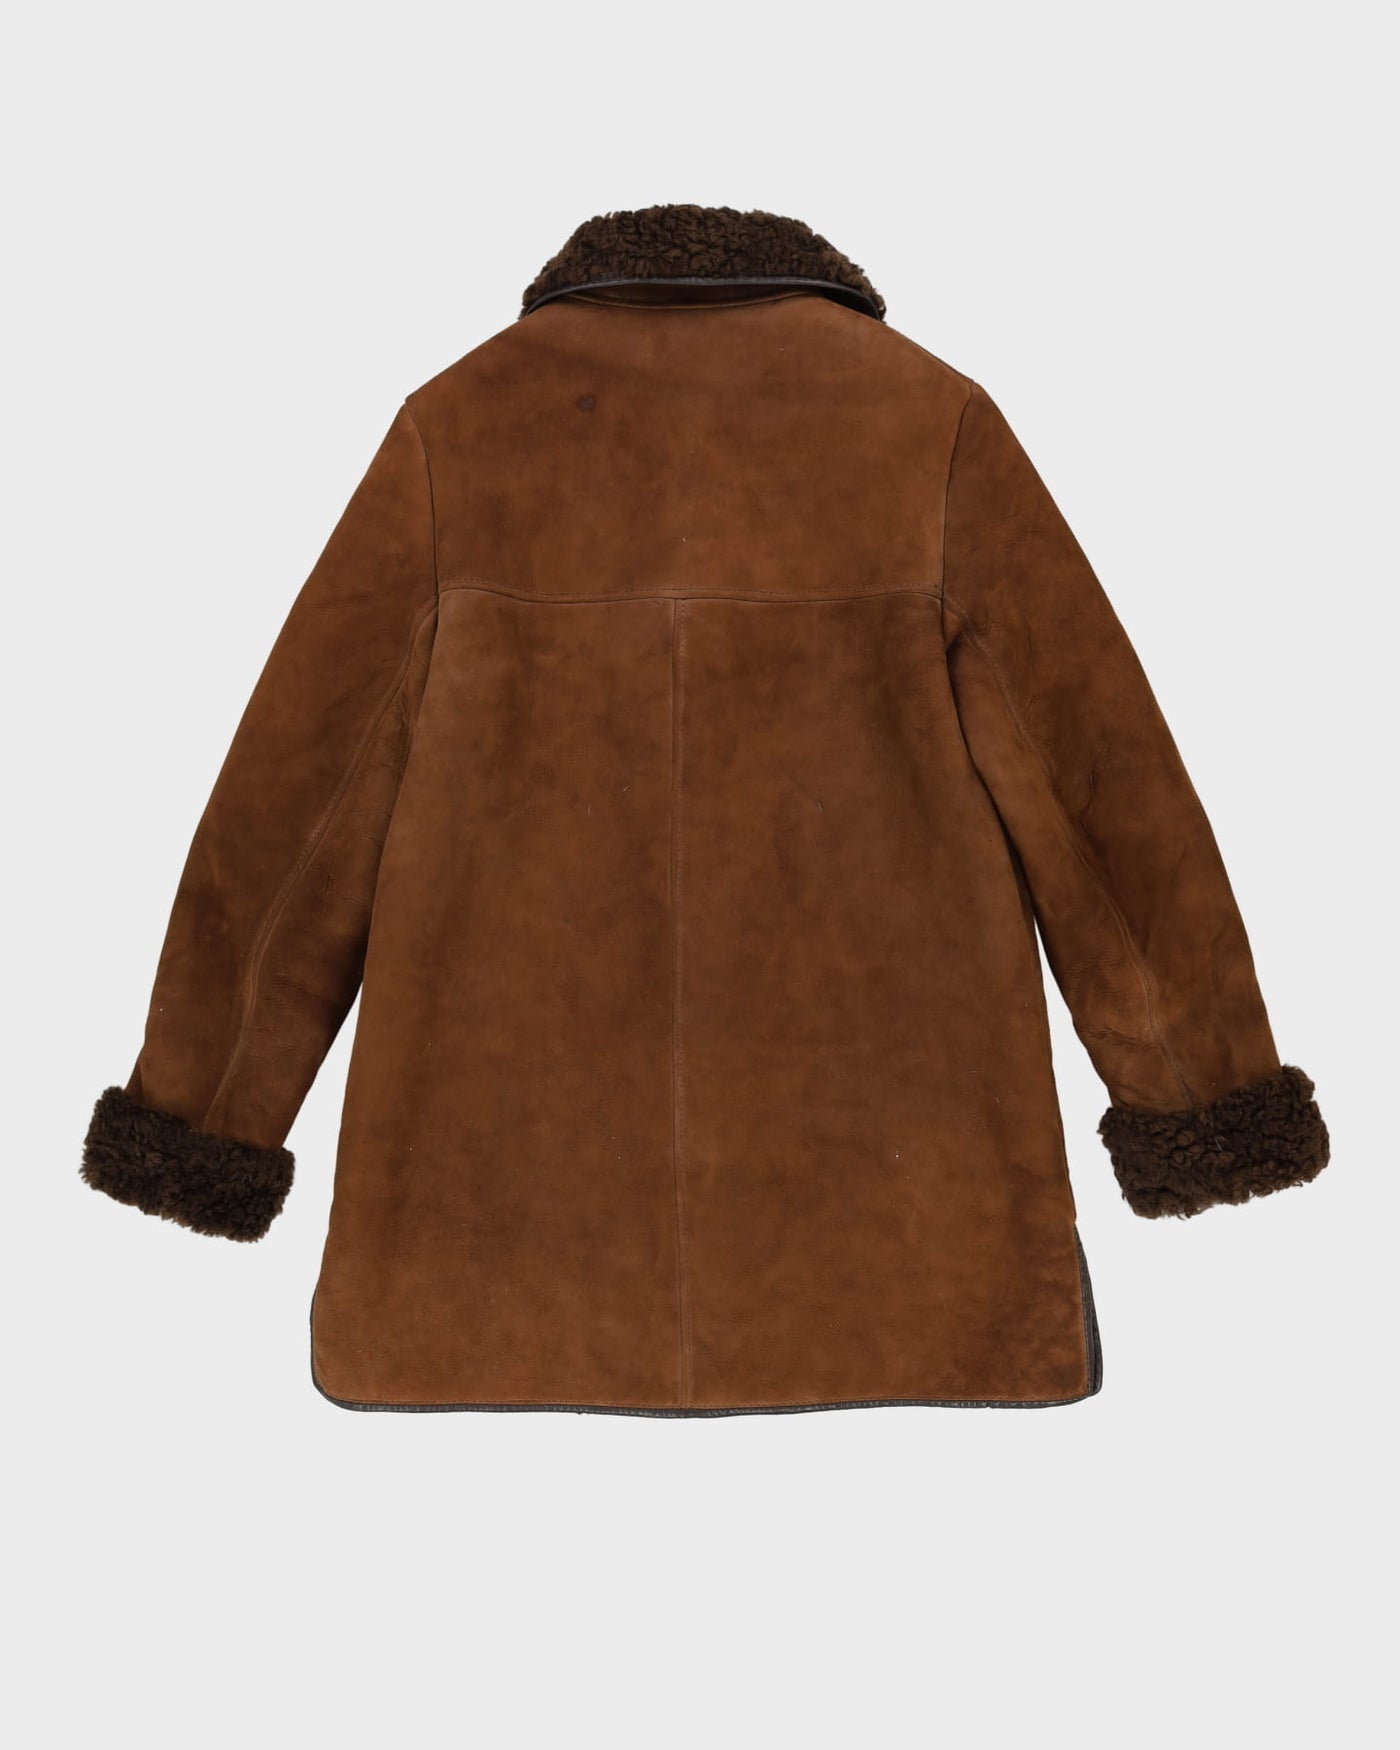 Vintage 80s Brown Wool-Lined Leather Jacket - M